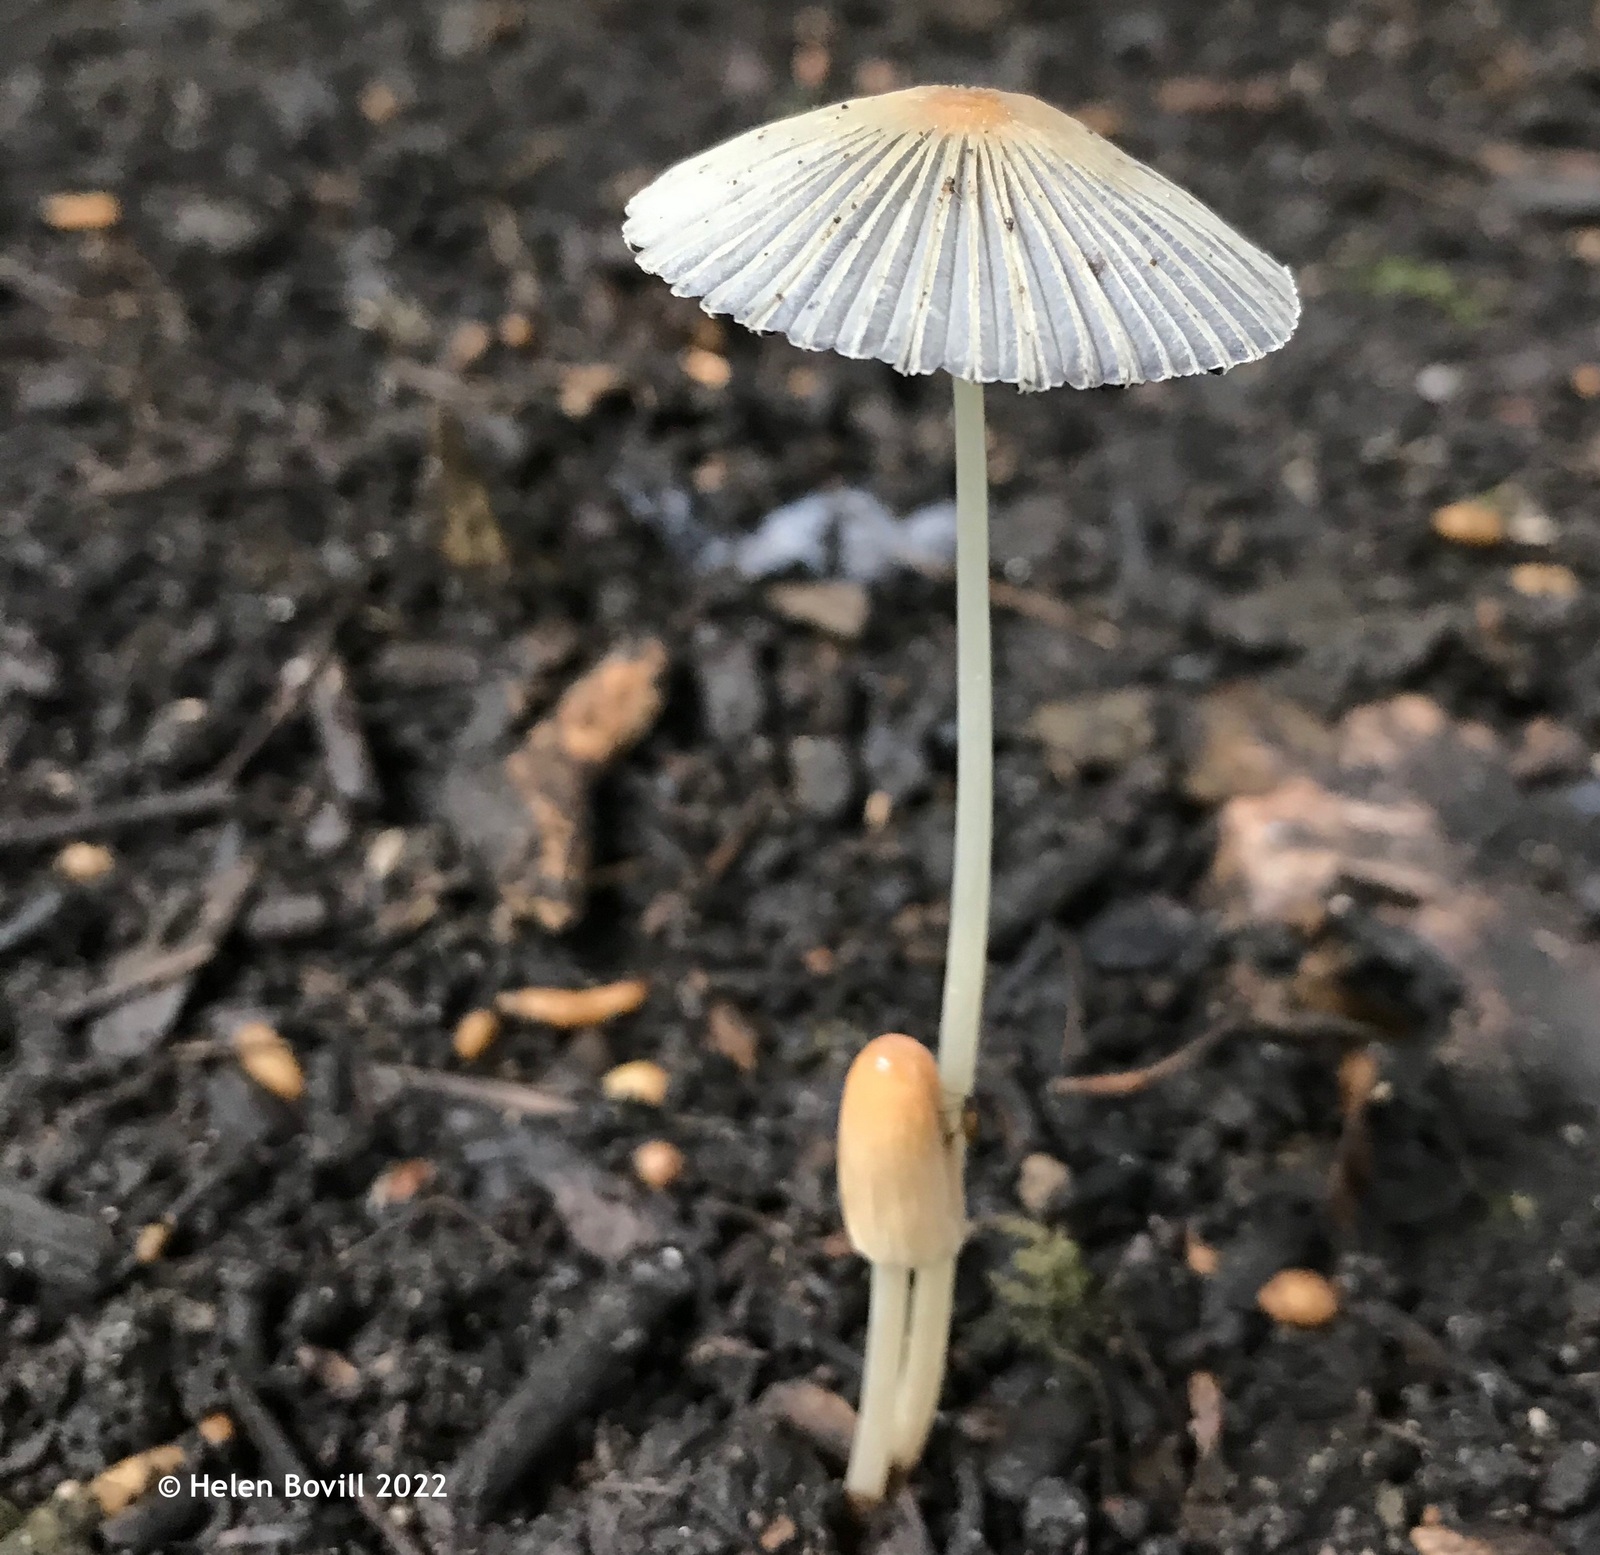 Inkcap mushroom in the cemetery